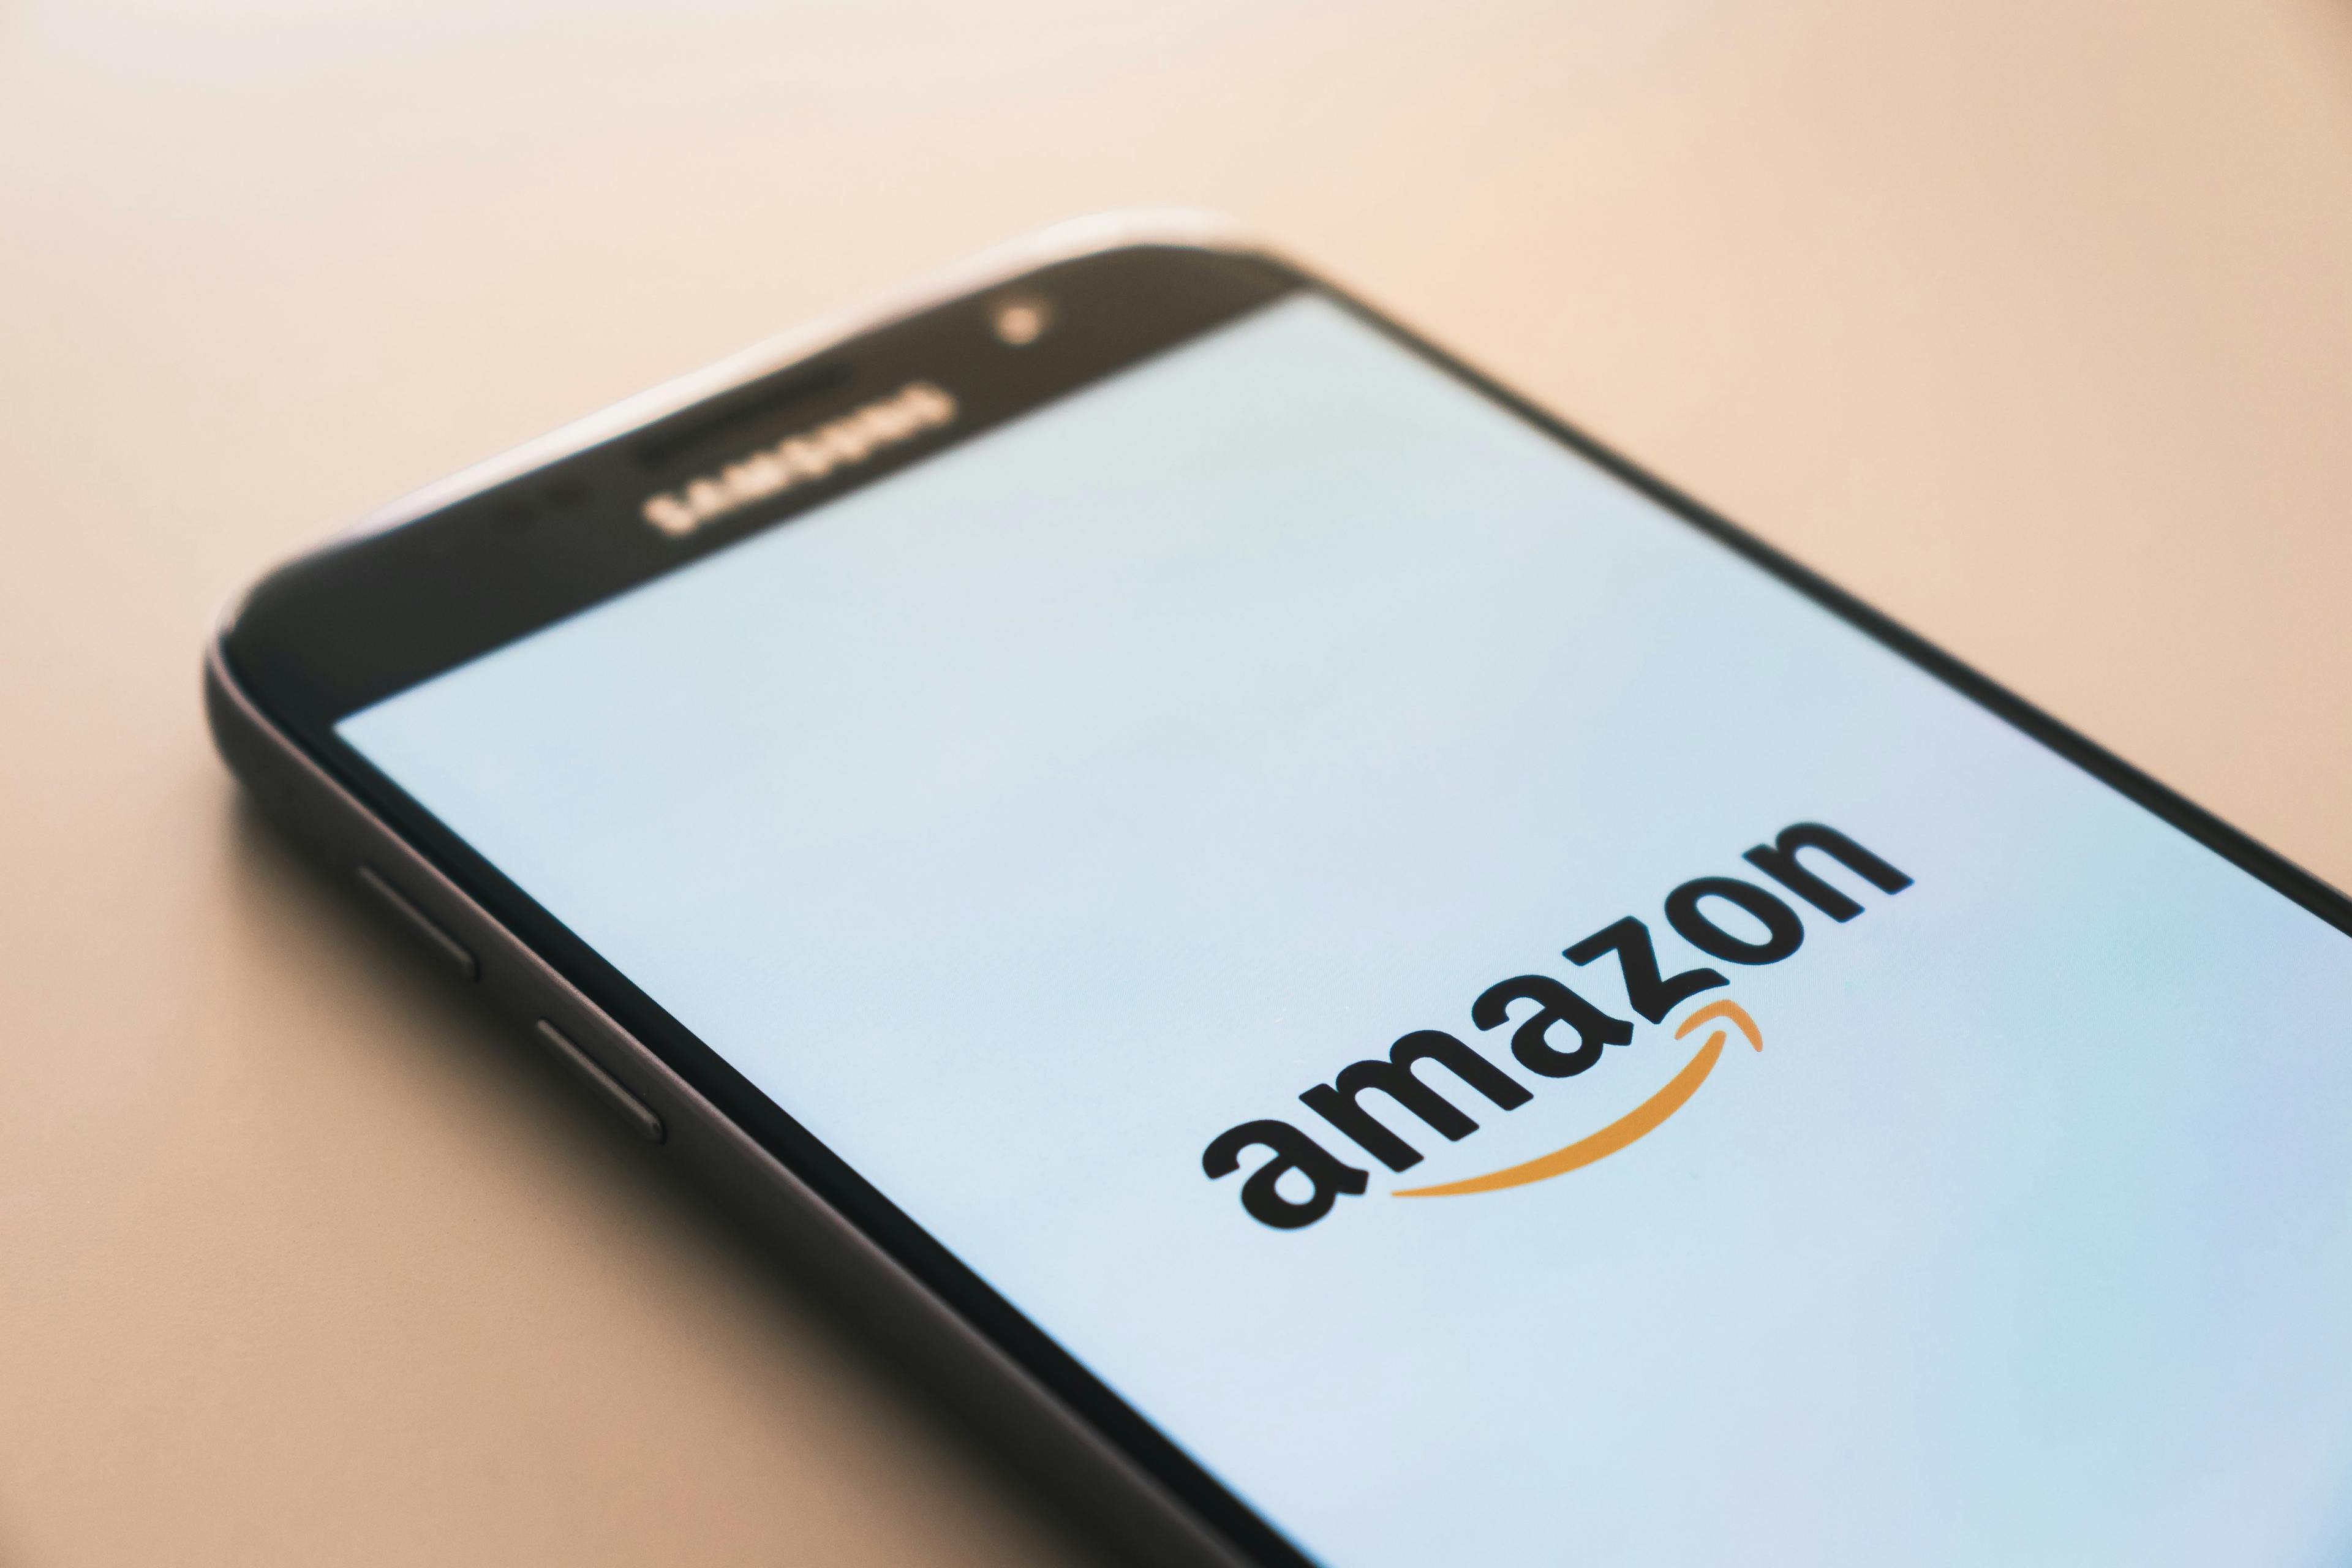 Amazon logo on a mobile devices